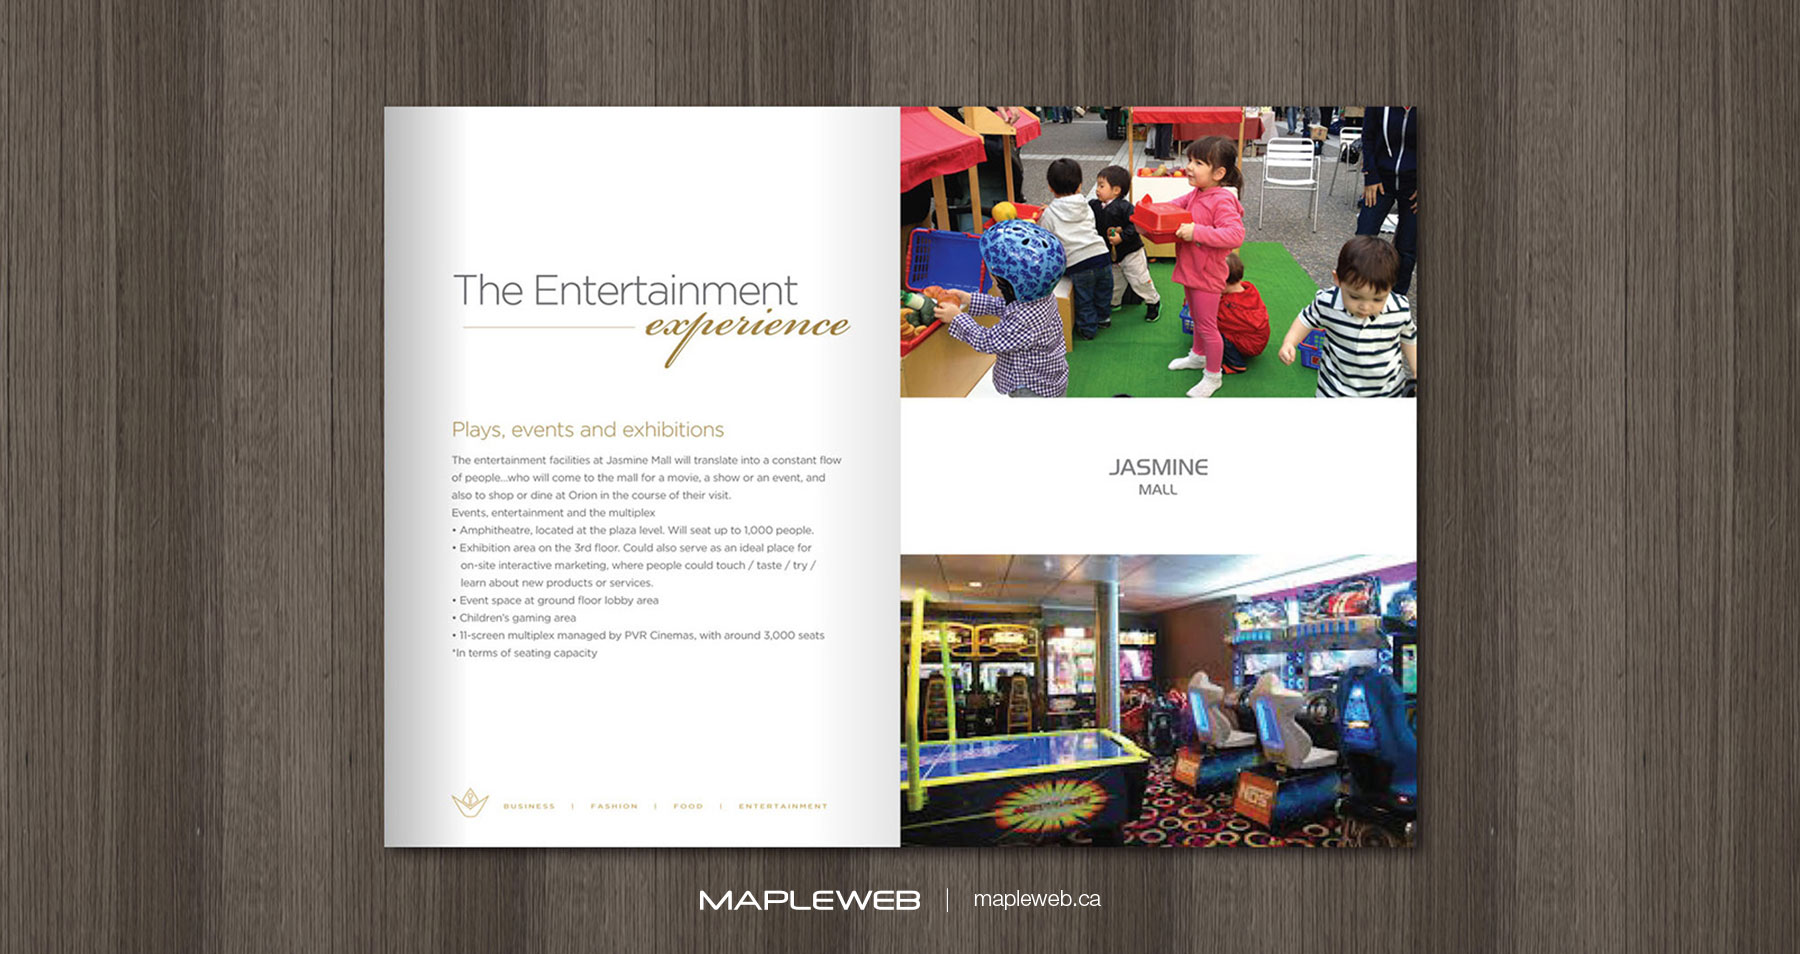 Jasmine Mall Brand design by Mapleweb Brochure Displaying Kids Play Stations